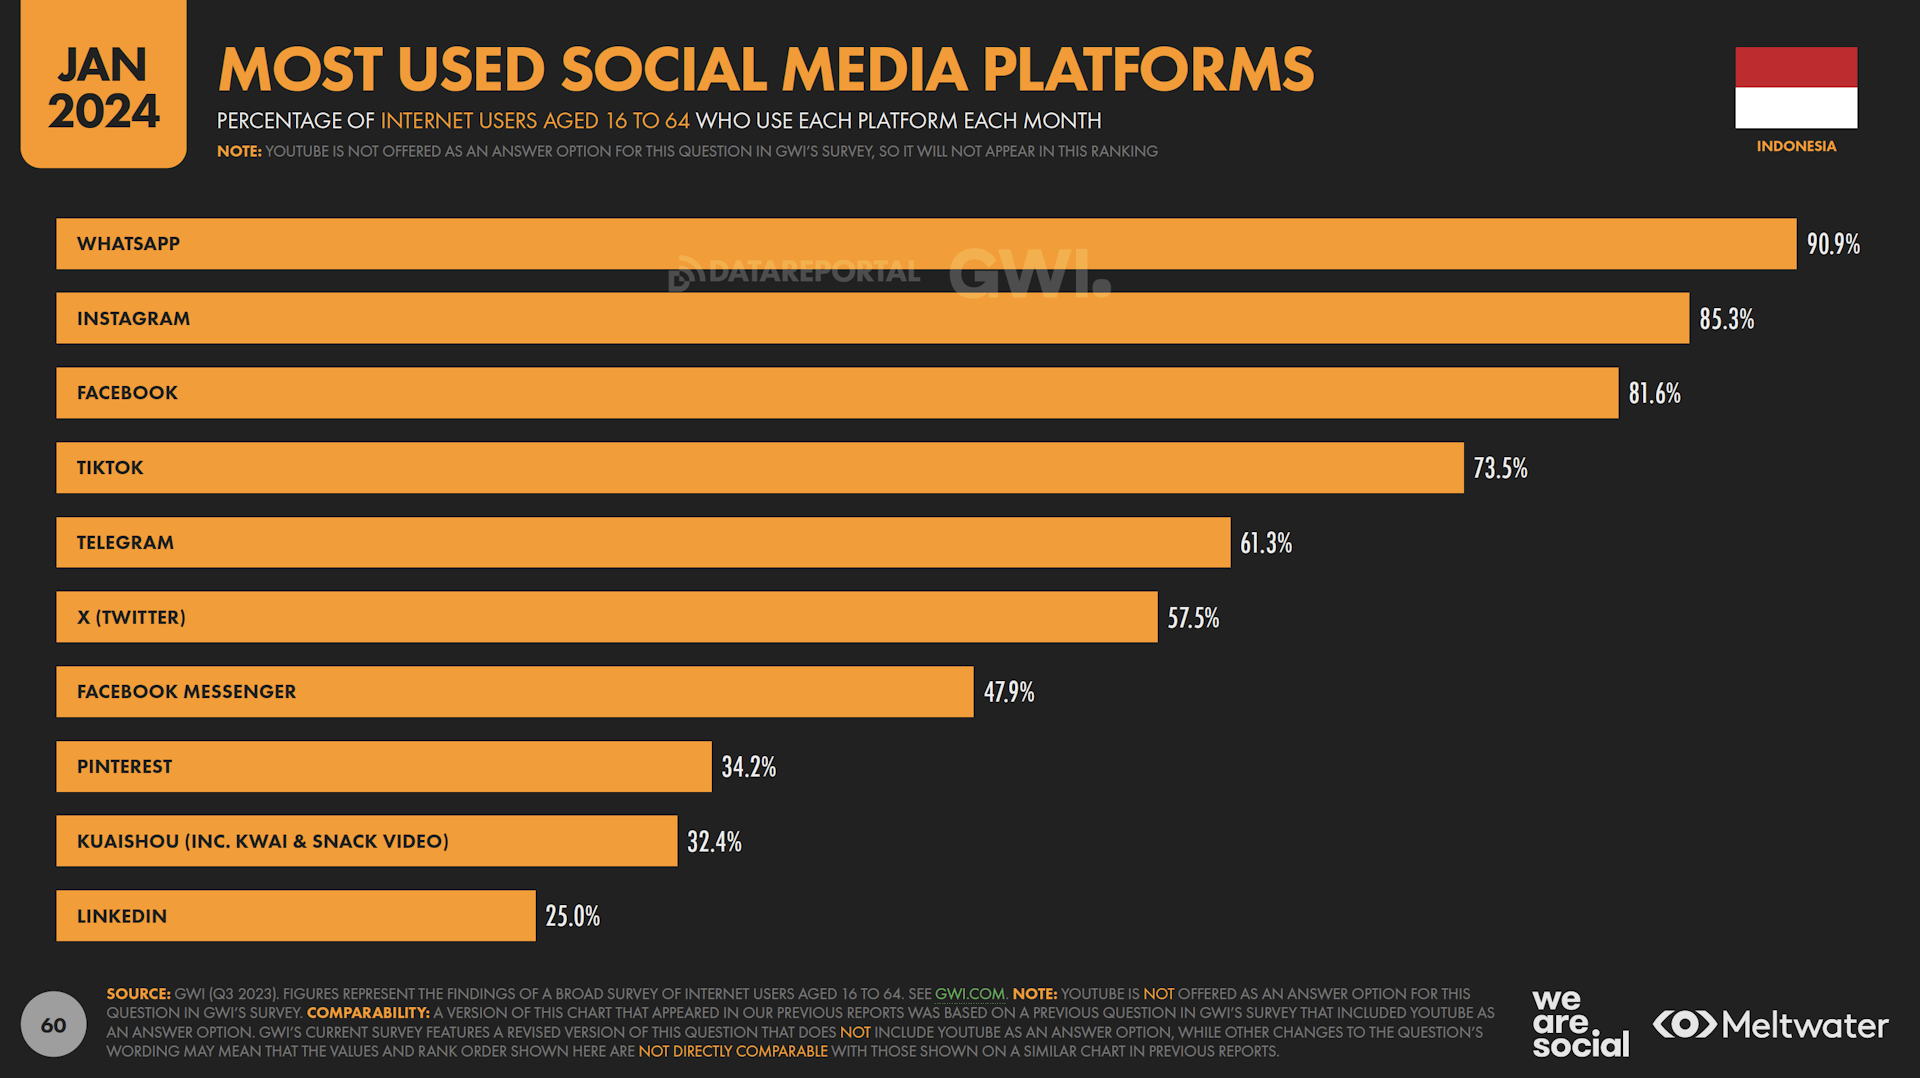 Most used social media platforms based on Global Digital Report 2024 for Indonesia